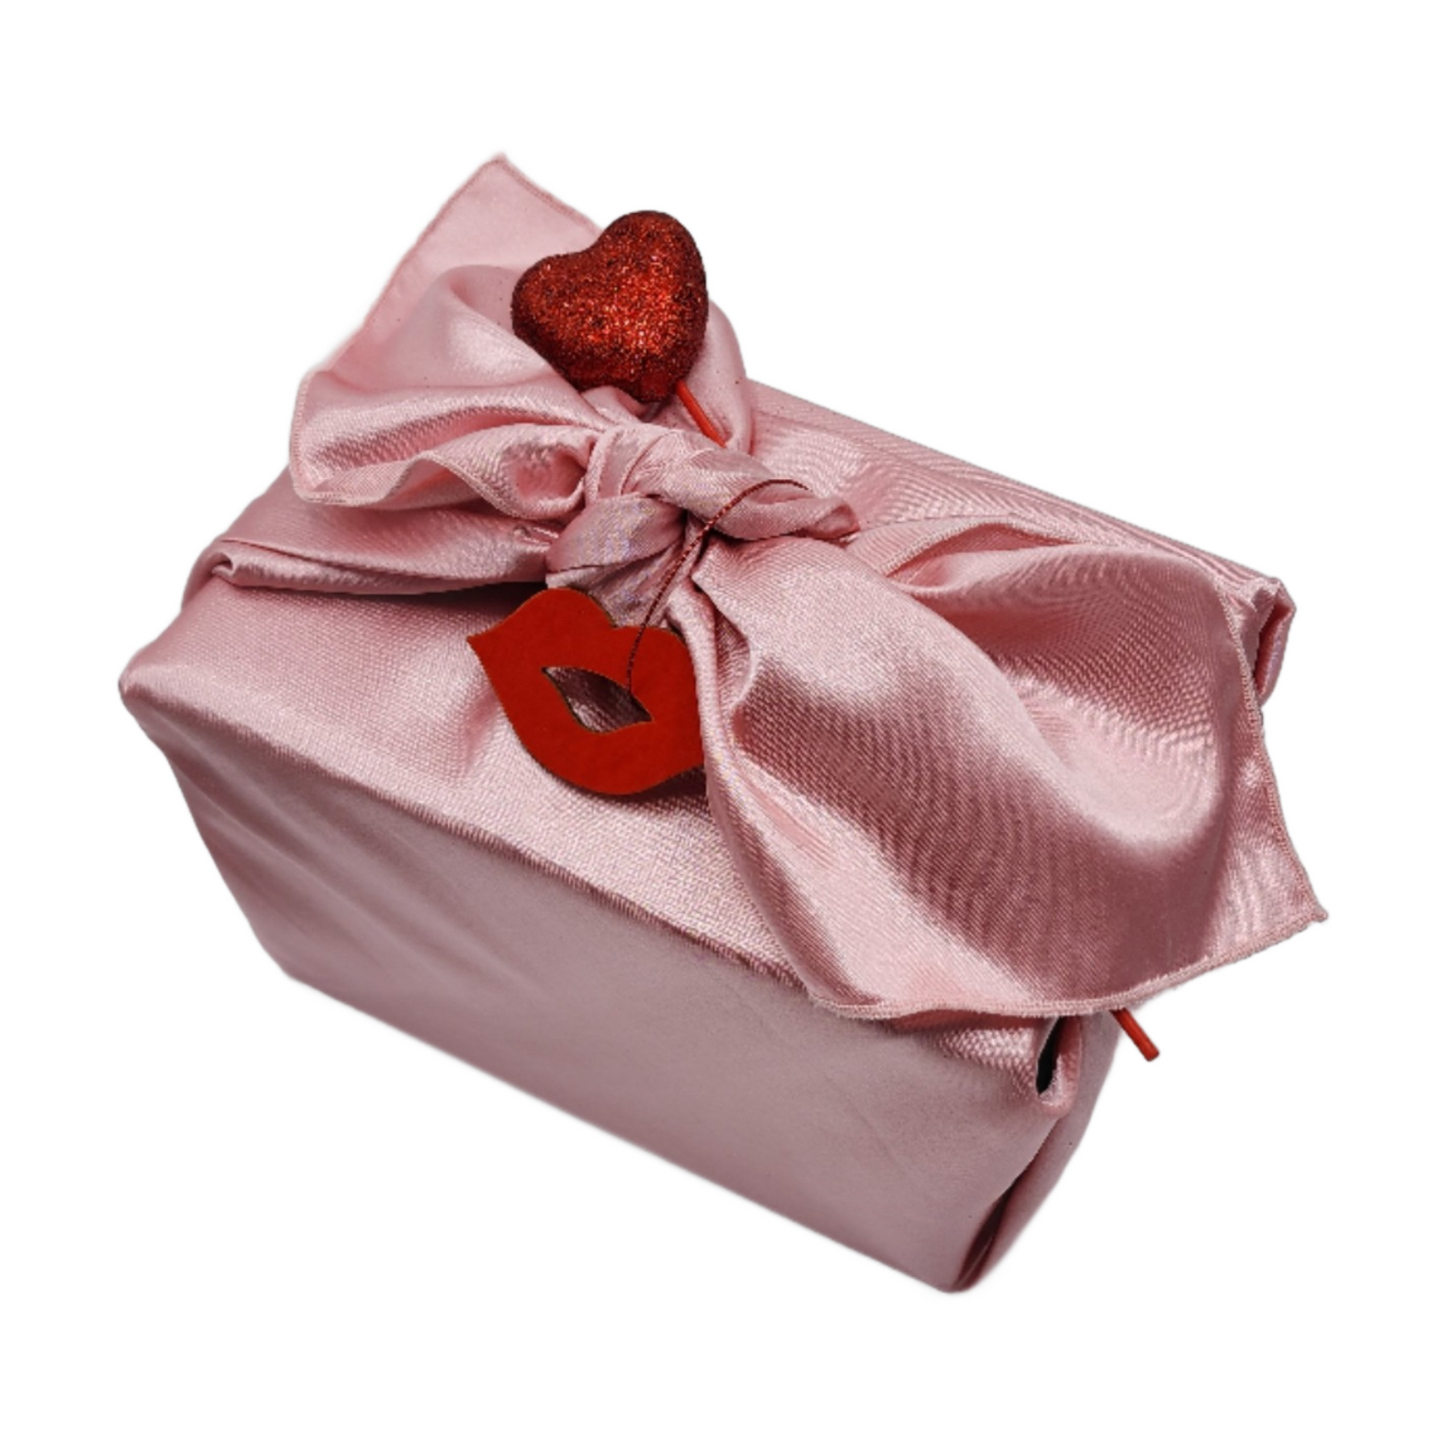 Furoshiki 3 pc Fabric Gift Wrap Kit - Valentines/Pink Satin